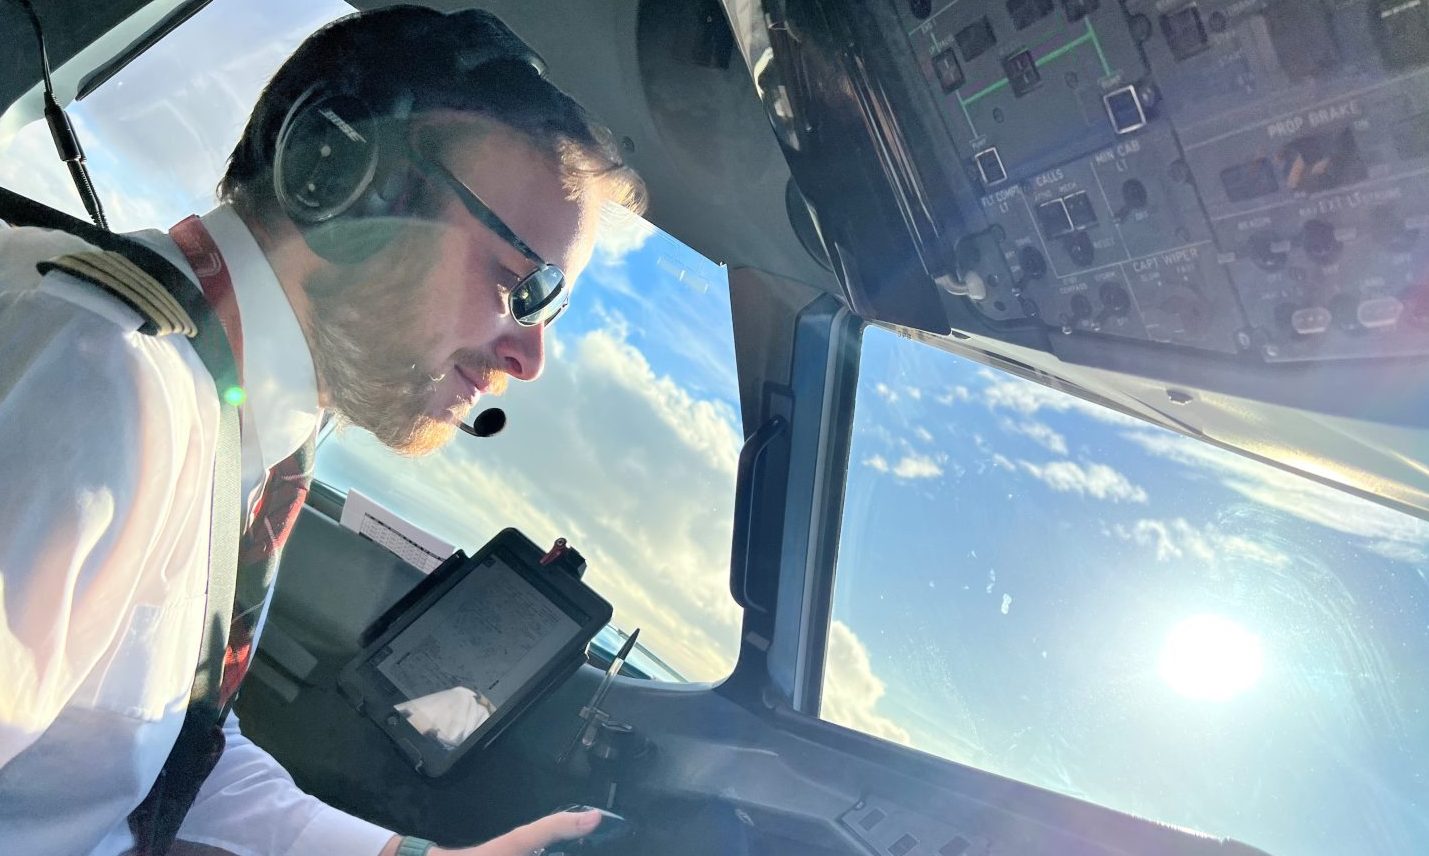 Captain Ronan Milne is a pilot for Loganair. Image: Loganair